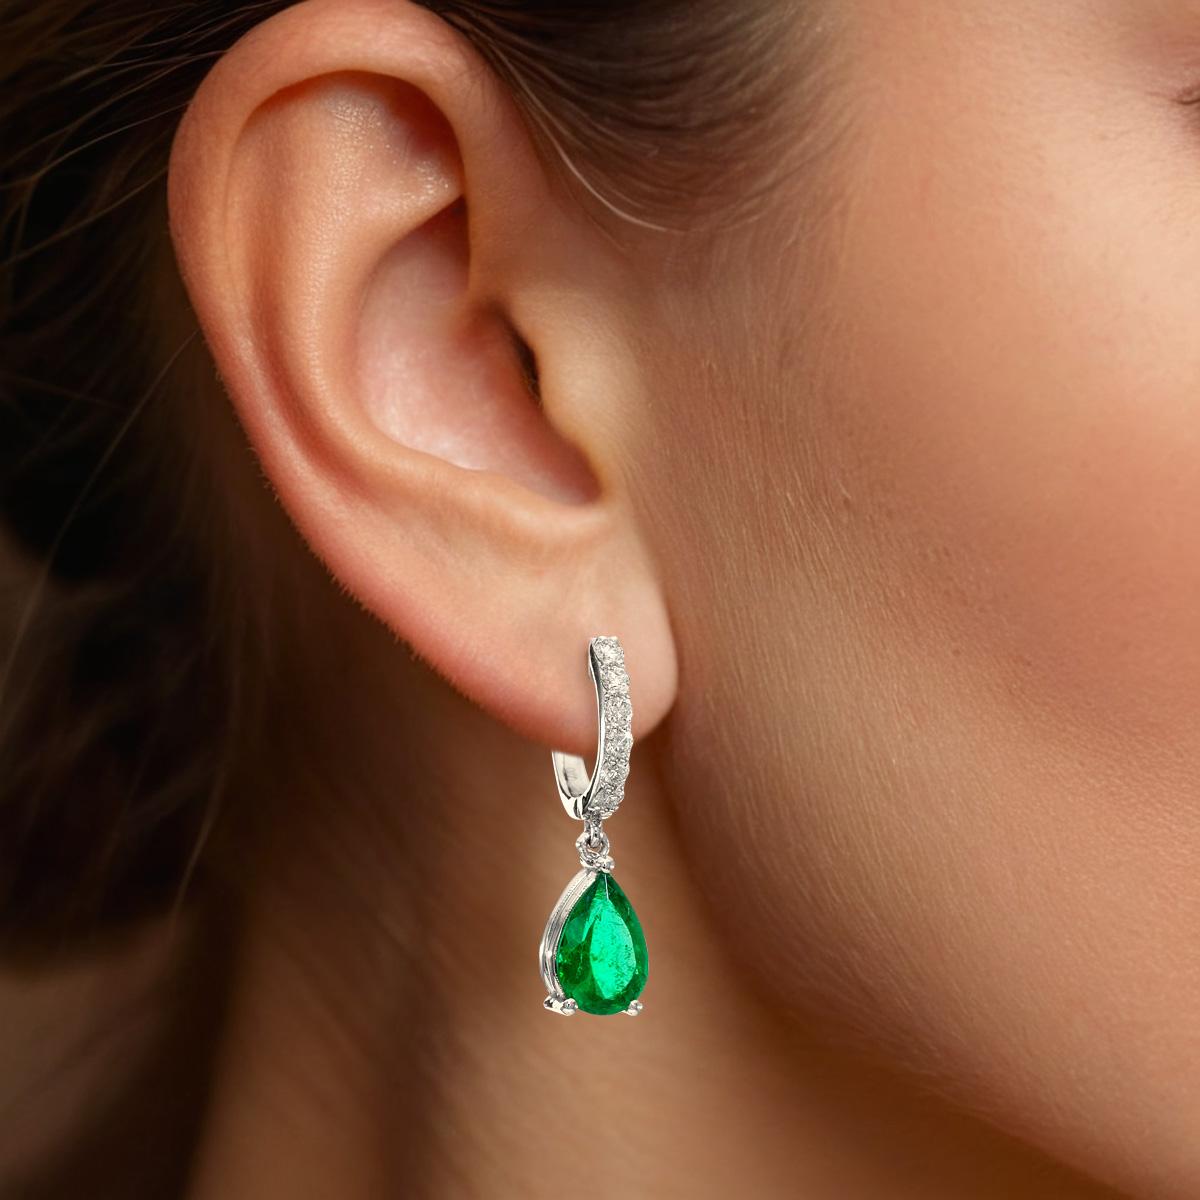 Women's GIA Certified 2.74 Carat Natural Colombian Emerald Diamond 18K W Gold Earrings For Sale